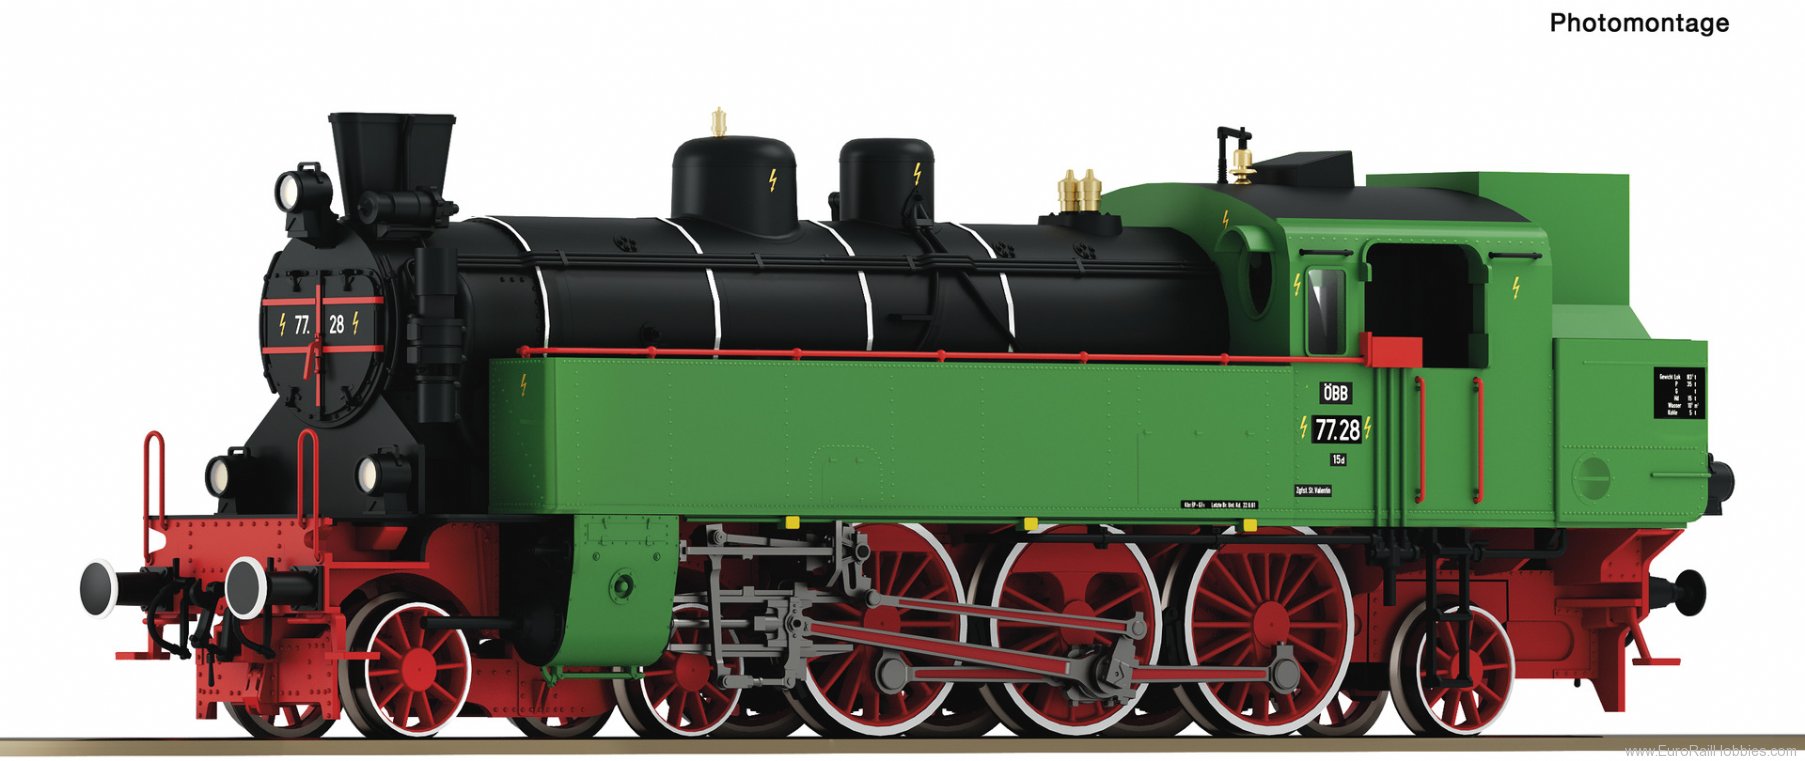 Roco 70083 Steam locomotive 77.28, ÃBB (DC Analog)